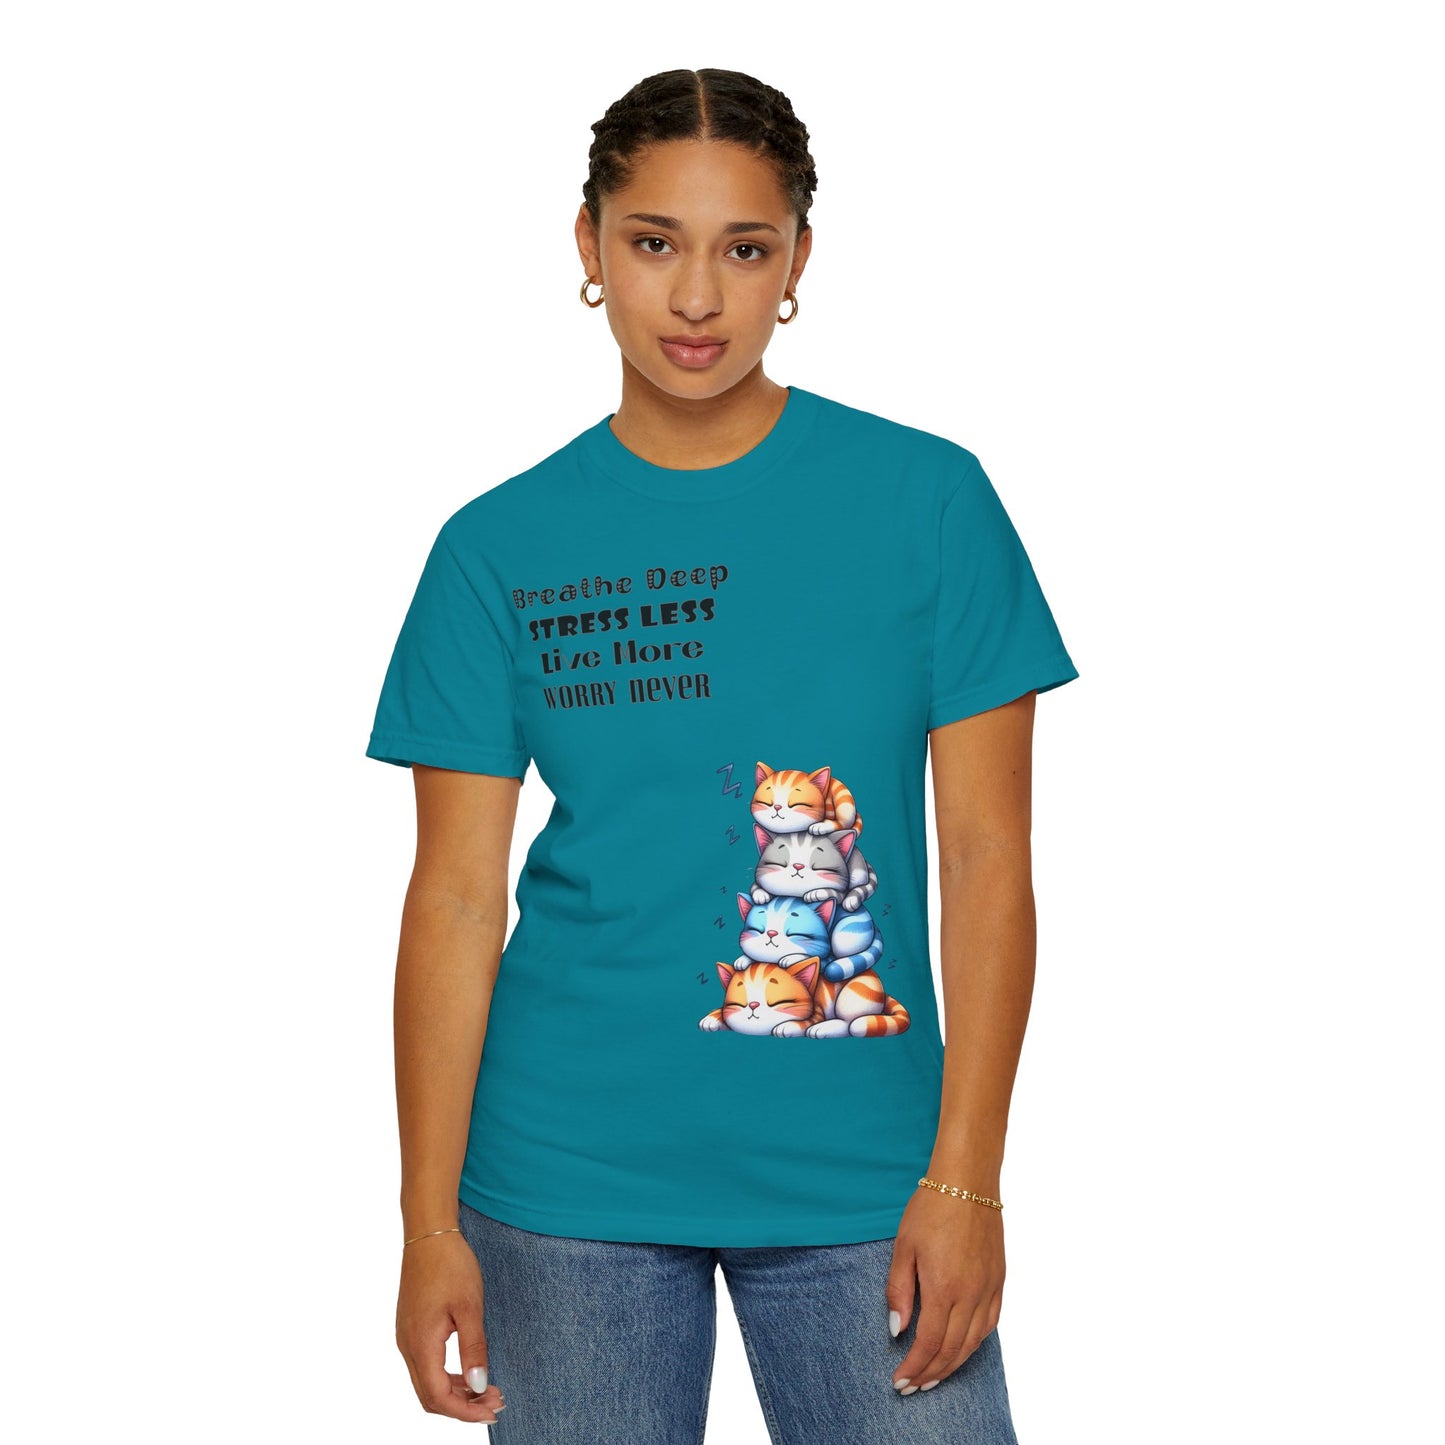 Breathe Deep Stress Less Live More Worry Never Unisex Garment-Dyed T-shirt, Comfort Colors® · 1717